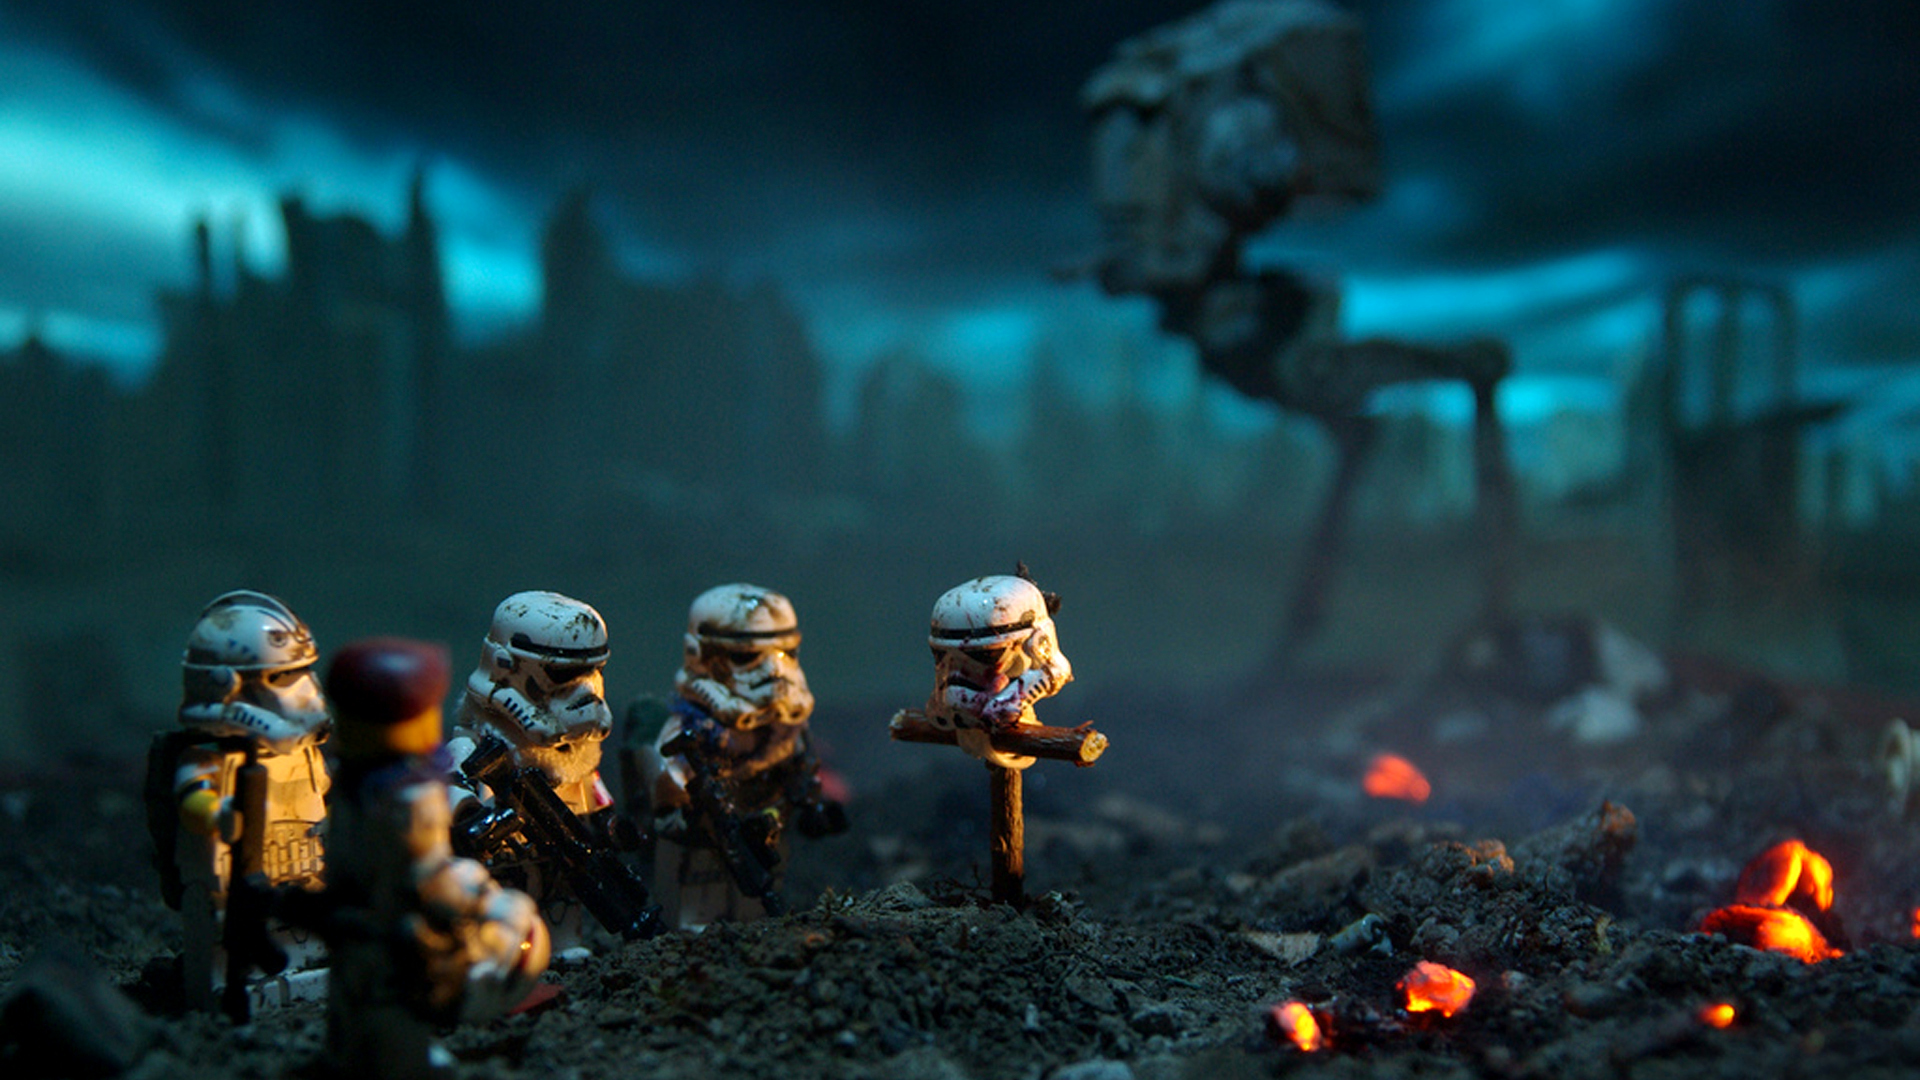 Lego Star Wars Reste En Paix Camarade Wallpaper